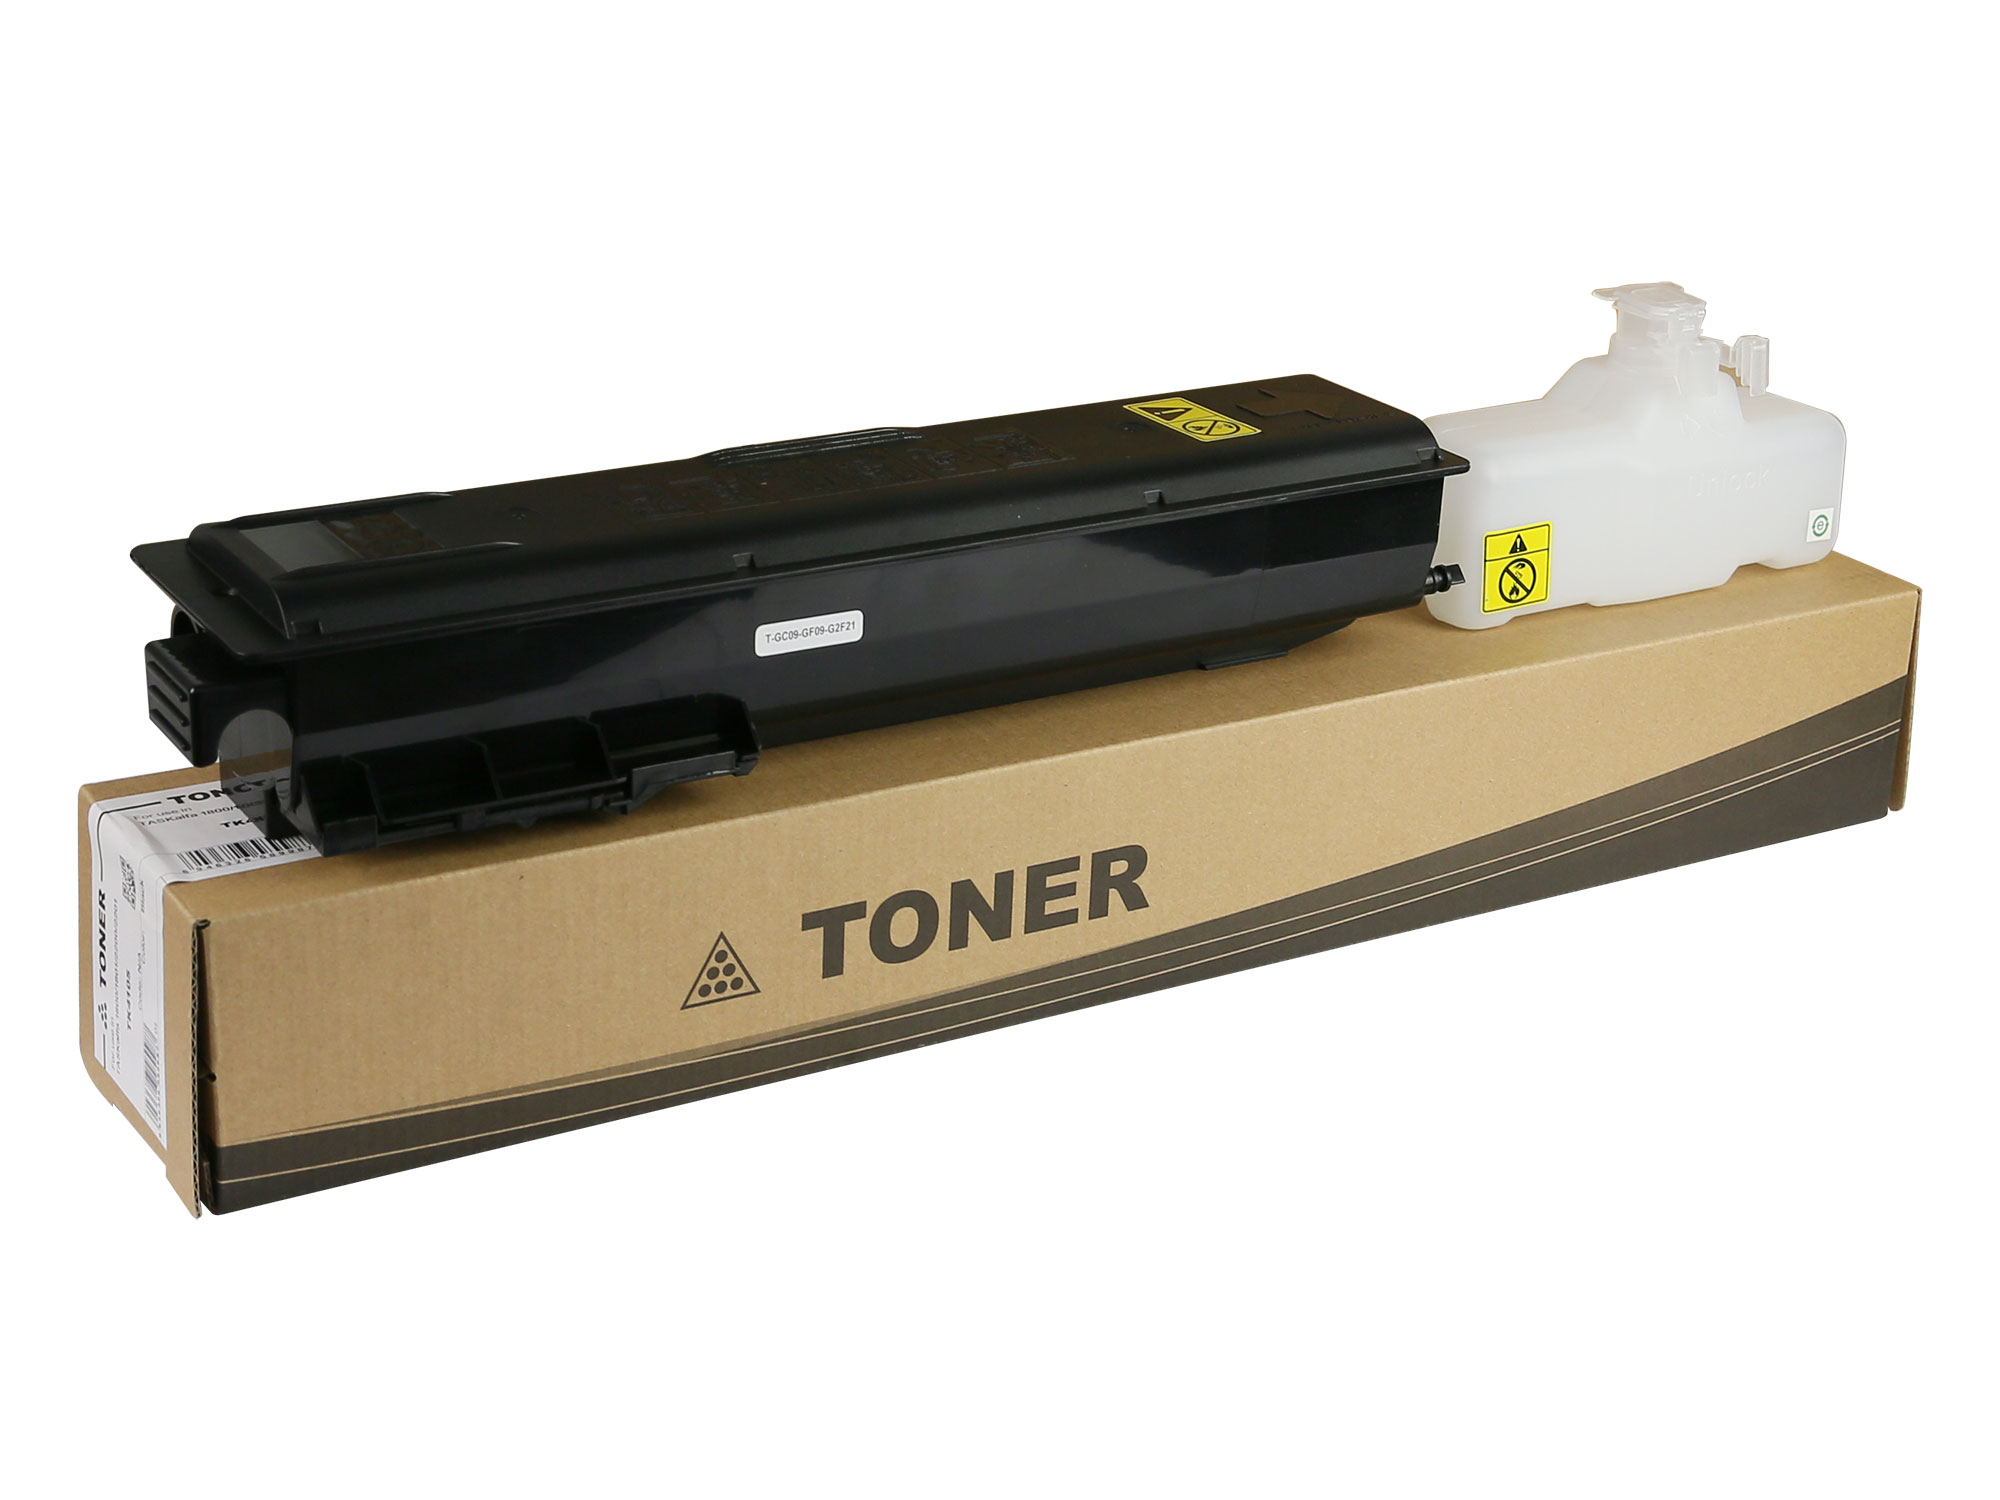 TK-4105 Toner Cartridge for Kyocera TASKalfa 1800